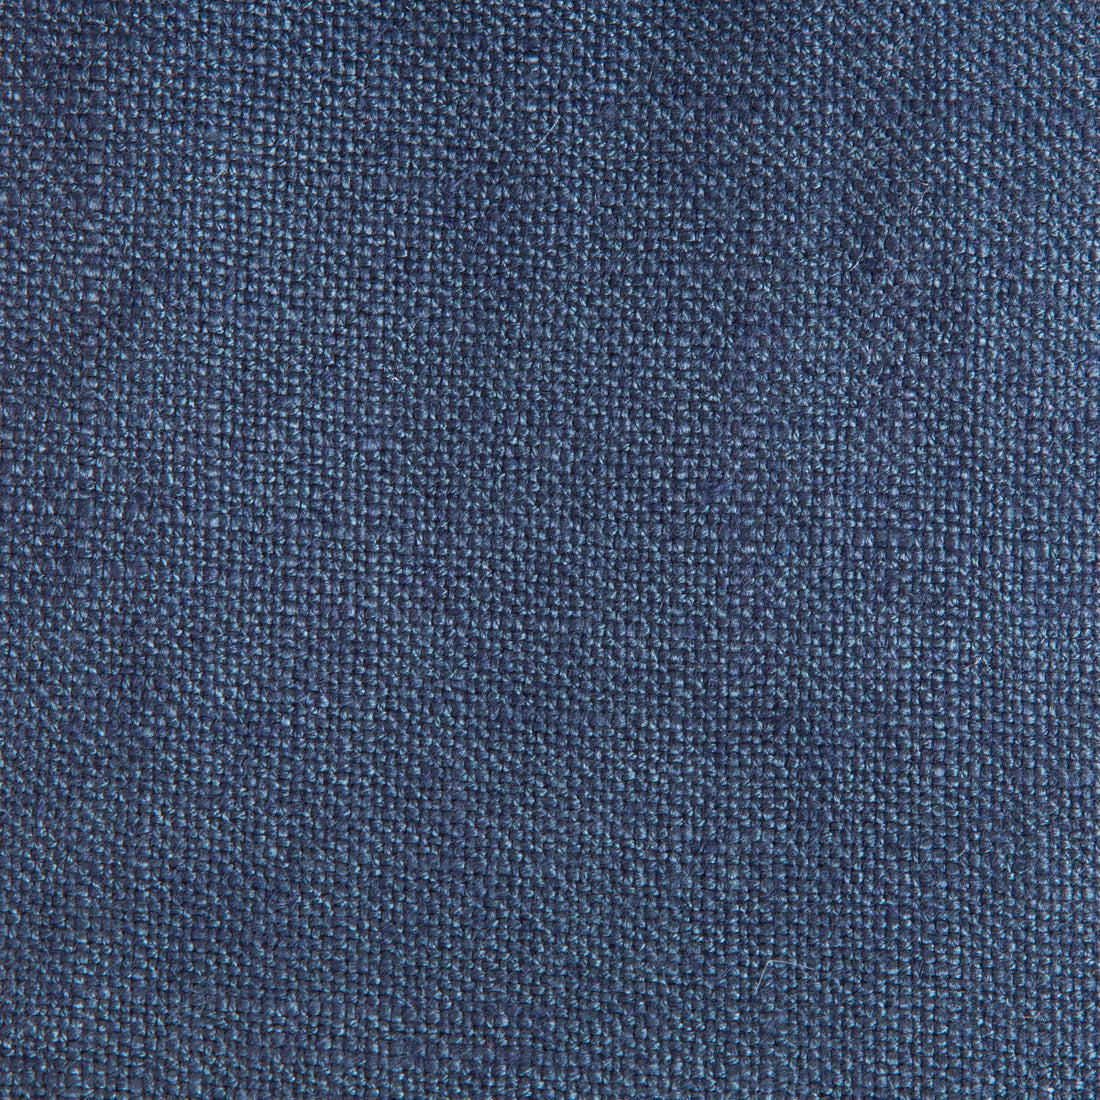 Peru fabric in azul anil color - pattern GDT5548.017.0 - by Gaston y Daniela in the Gaston Nuevo Mundo collection